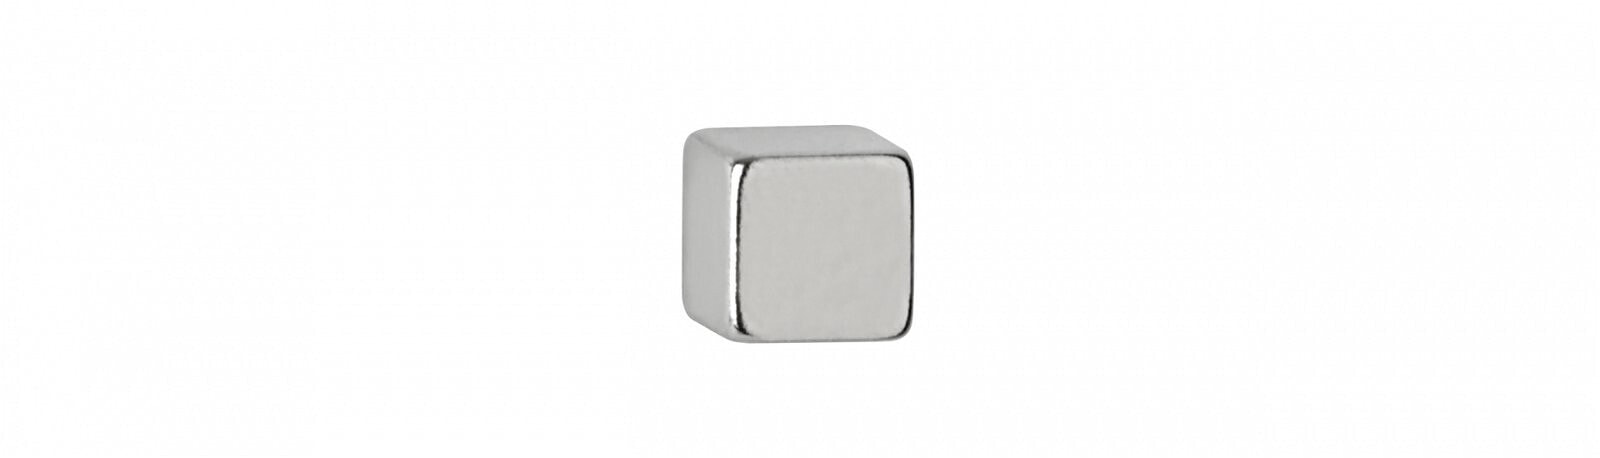 MAUL 6184096 - Rectangle - Neodymium - Silver - Gloss - 5 mm - 5 mm